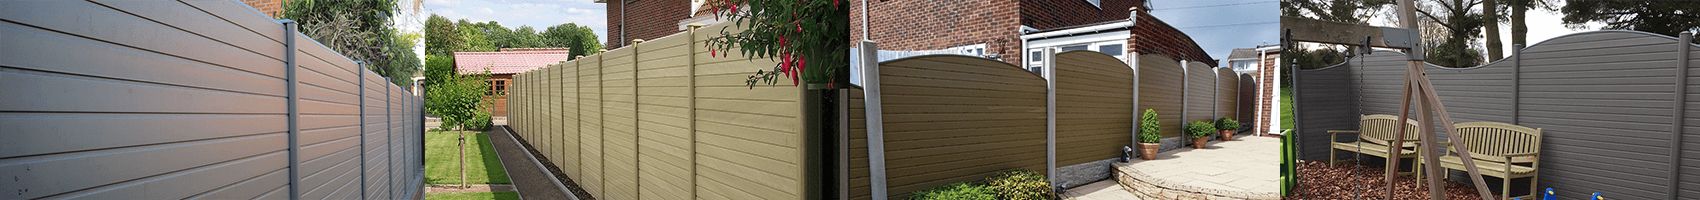 110mm x 90mm PVC Composite Fence Post Natural 1.8m